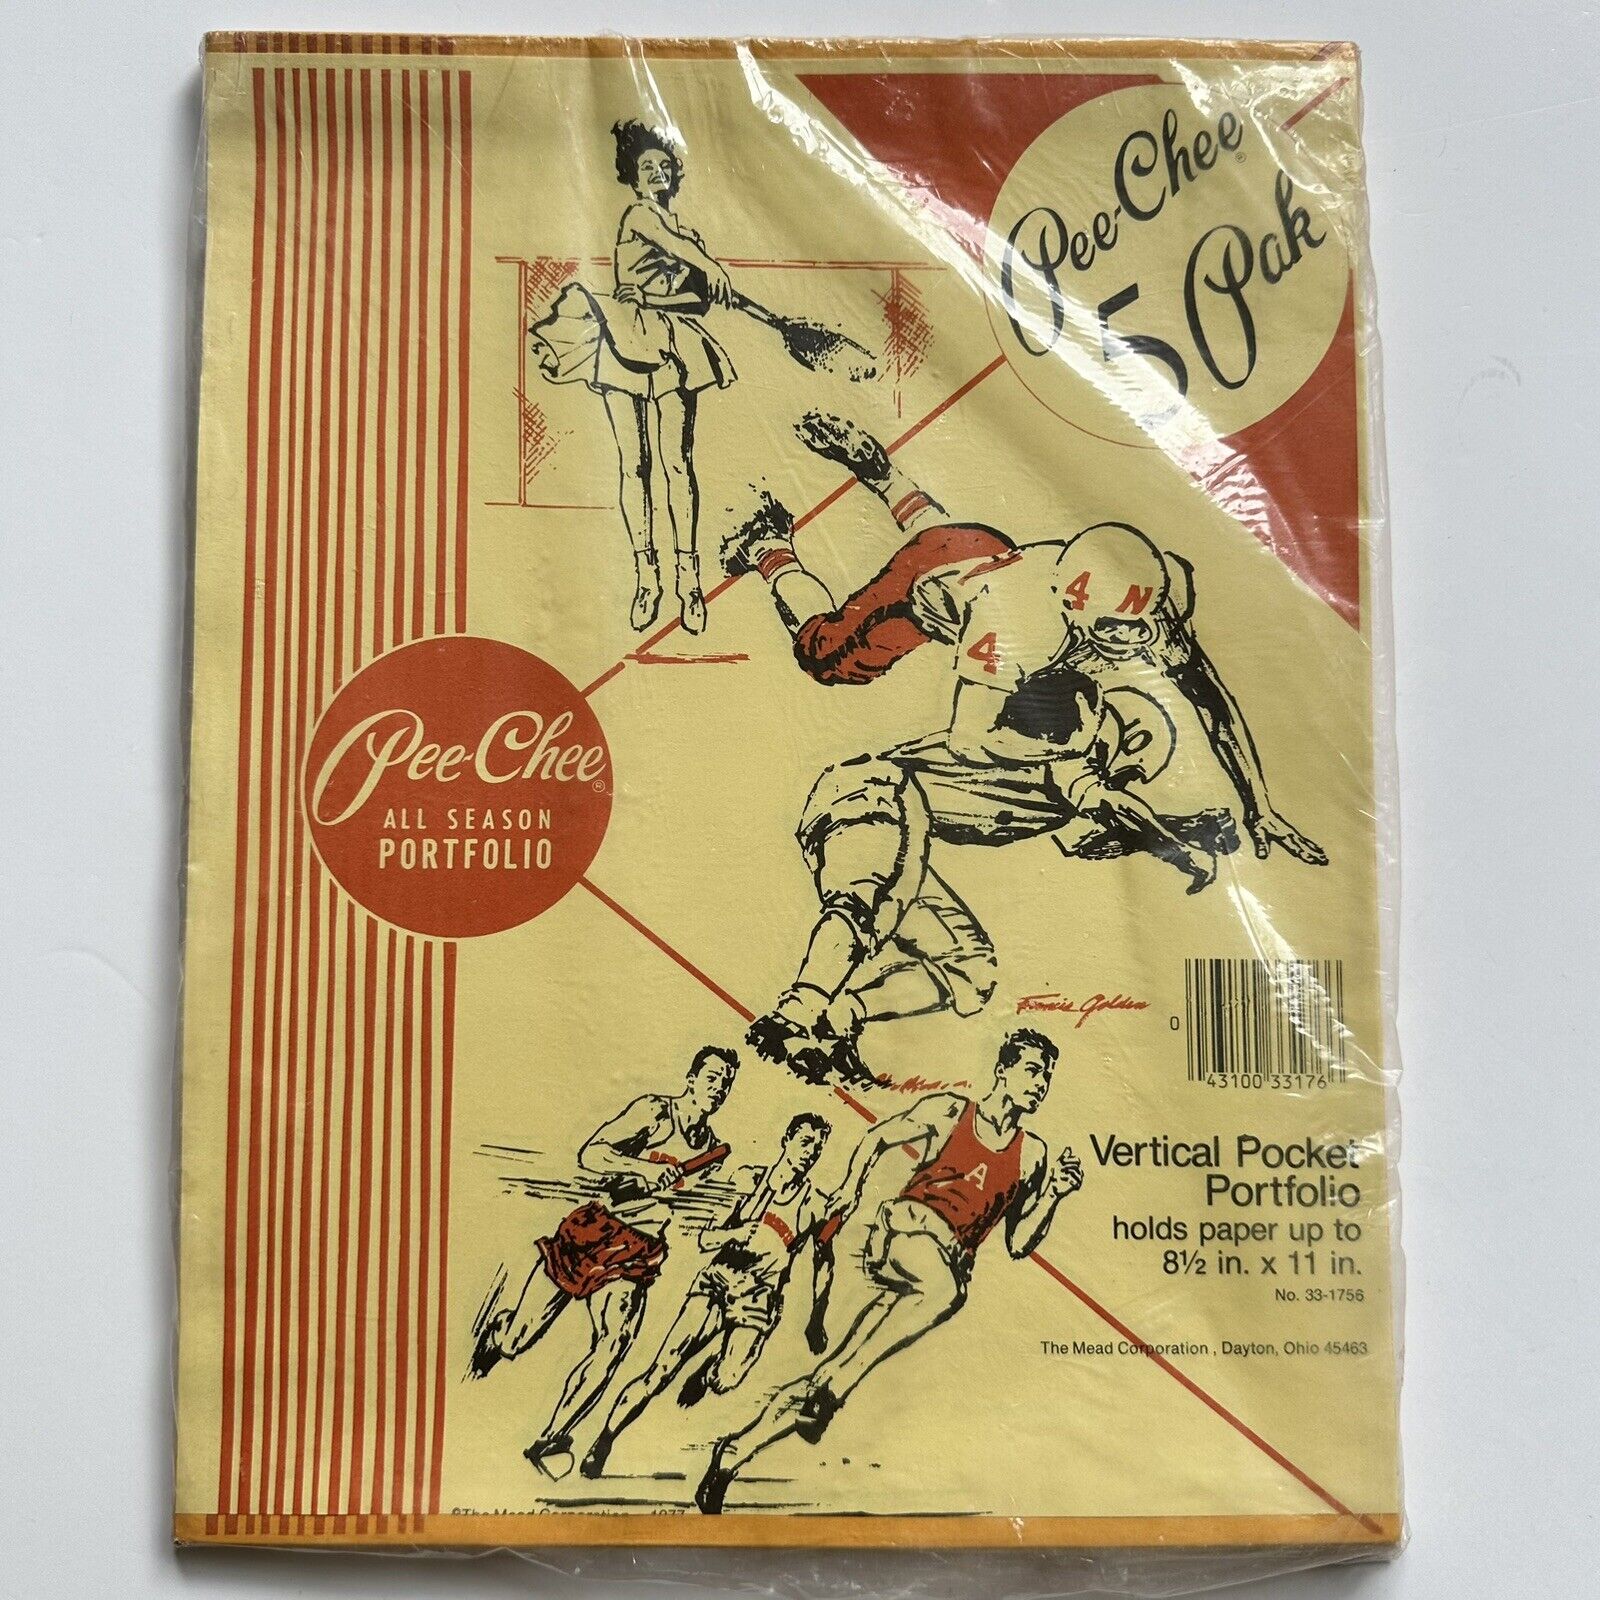 Lot Of 5 Vintage Pee-Chee All Season Portfolio Folders No 33170 USA New